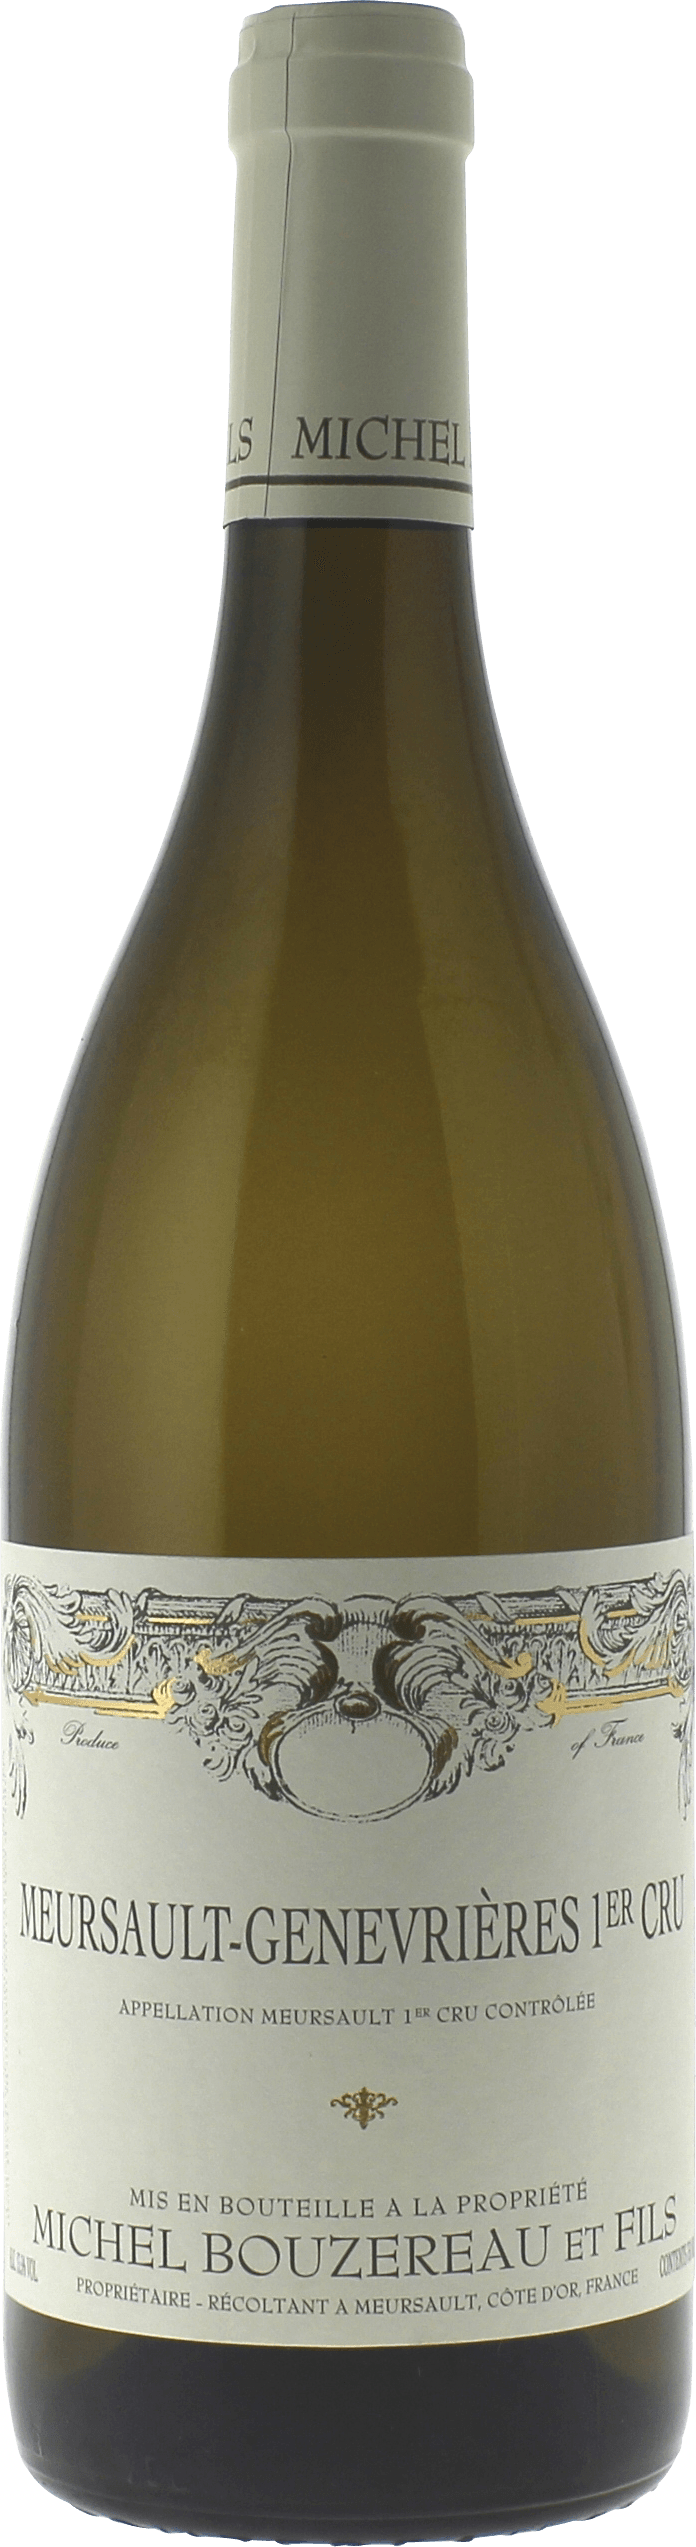 Meursault genevrires 1er cru 2017 Domaine BOUZEREAU Michel et fils, Bourgogne blanc